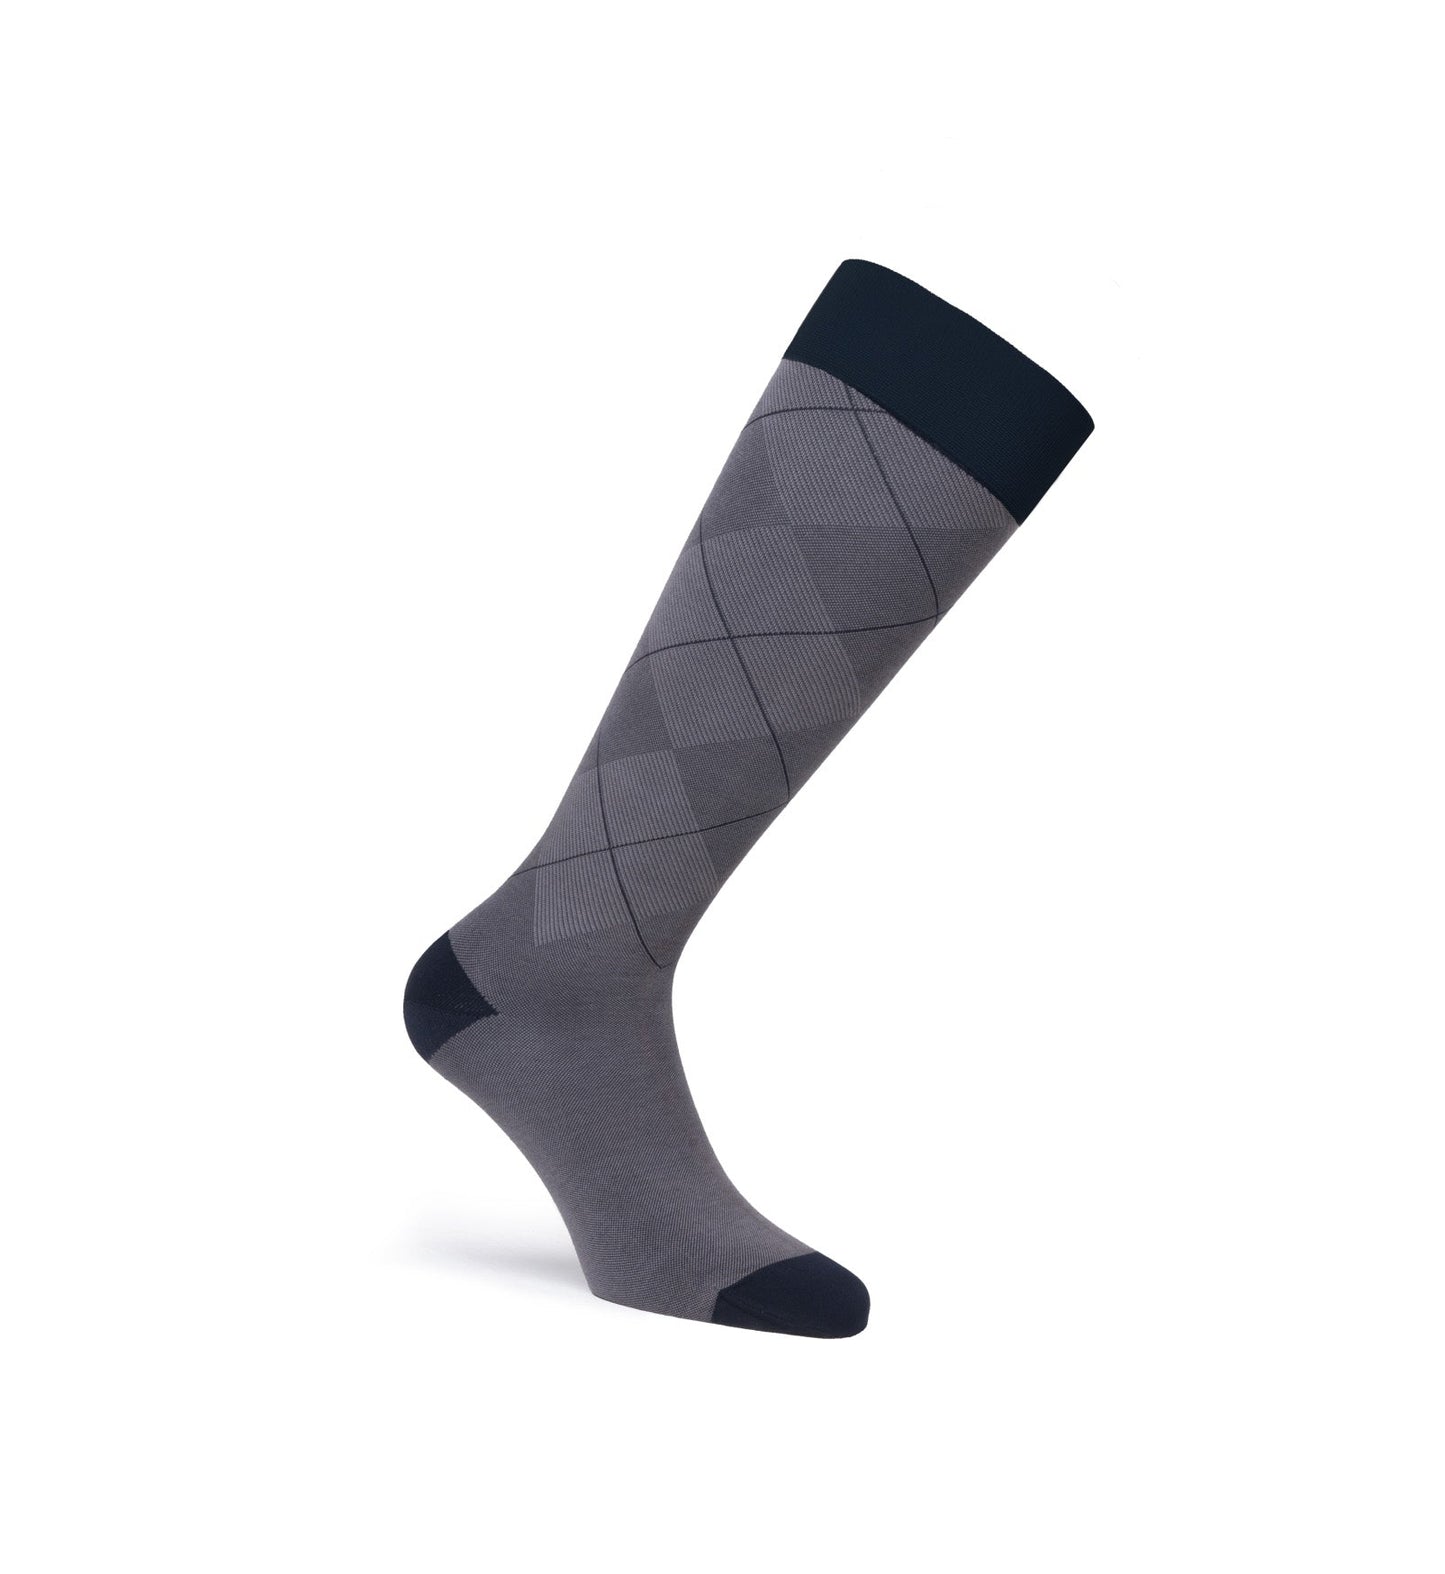 JOBST Casual Pattern Compression Socks 20-30 mmHg, Knee High, Closed Toe, Petite